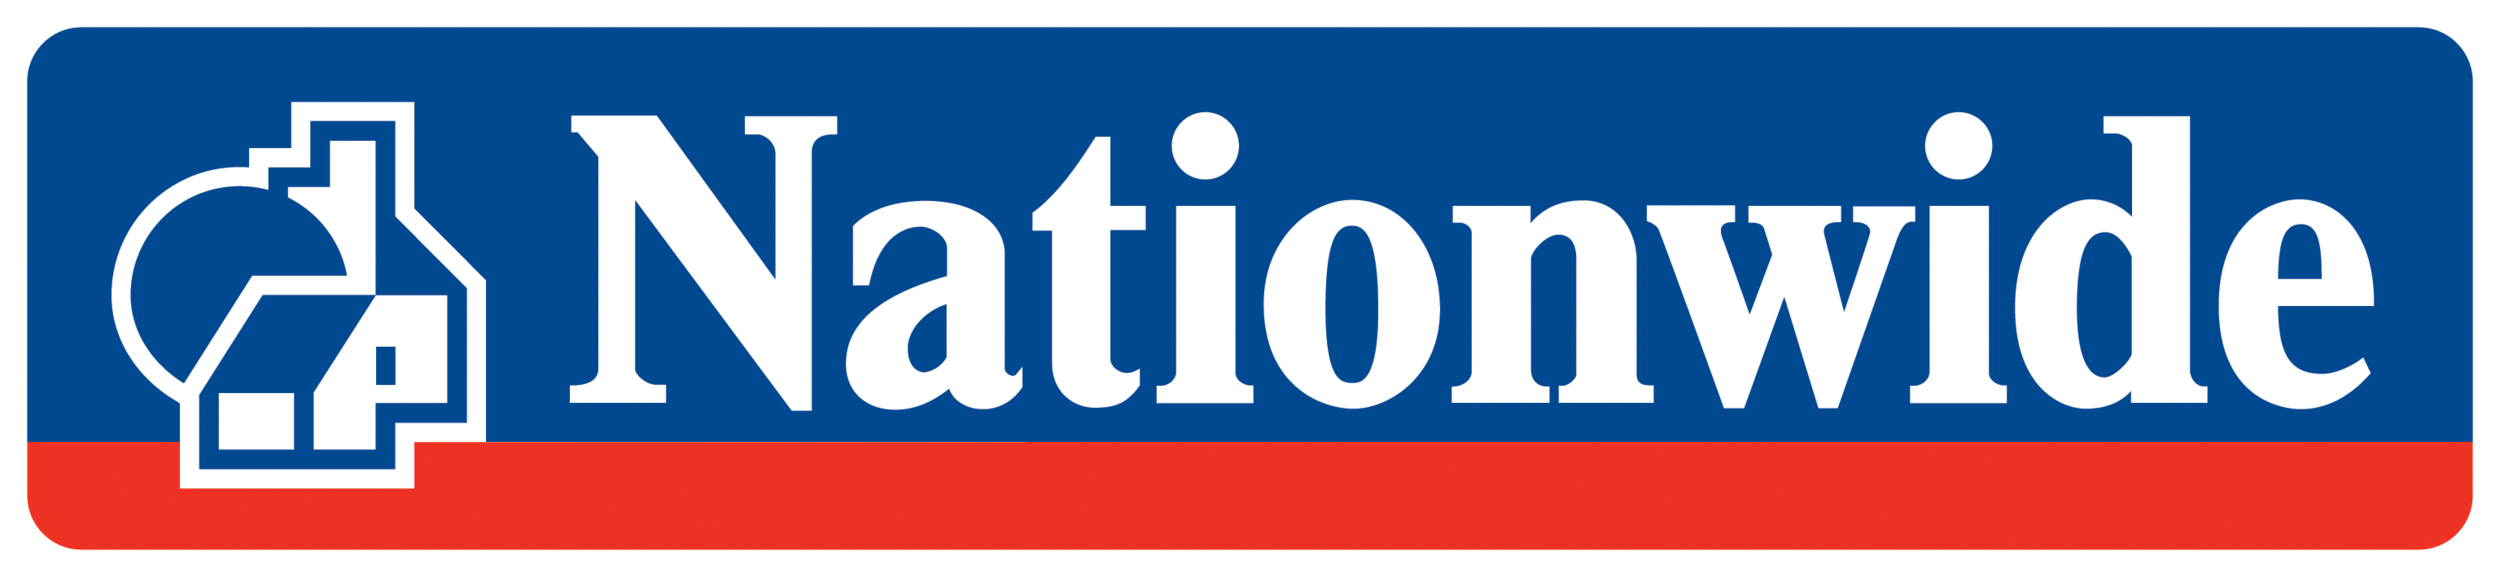 Nationwide-logo-1.png